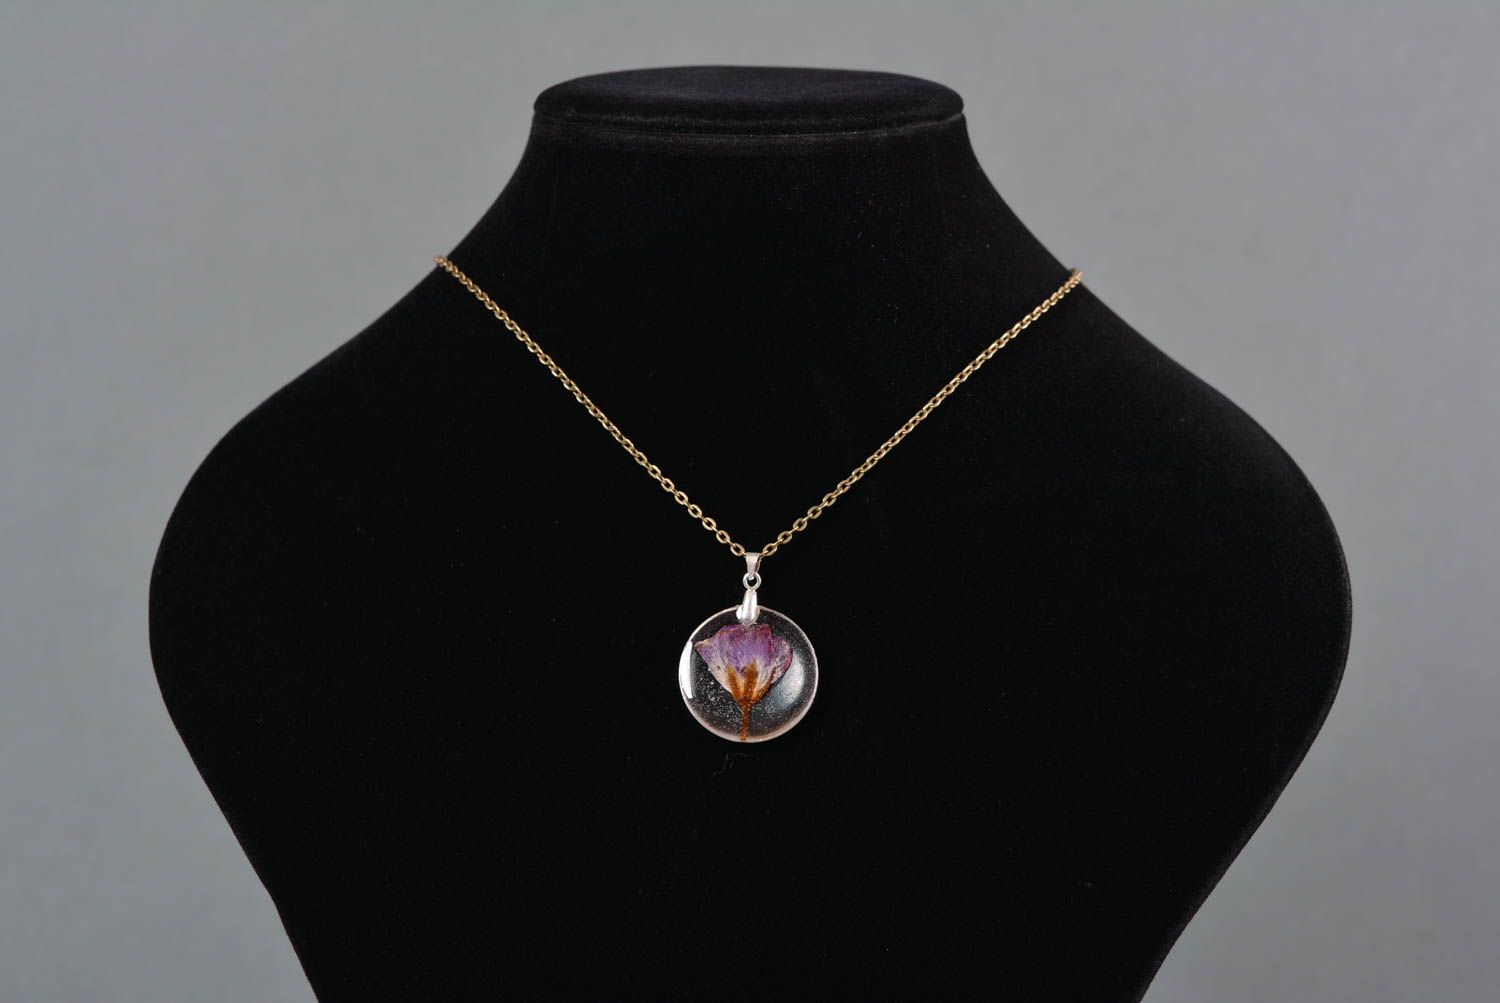 Handmade flower necklace epoxy resin charm necklace fashion jewelry gift ideas photo 2